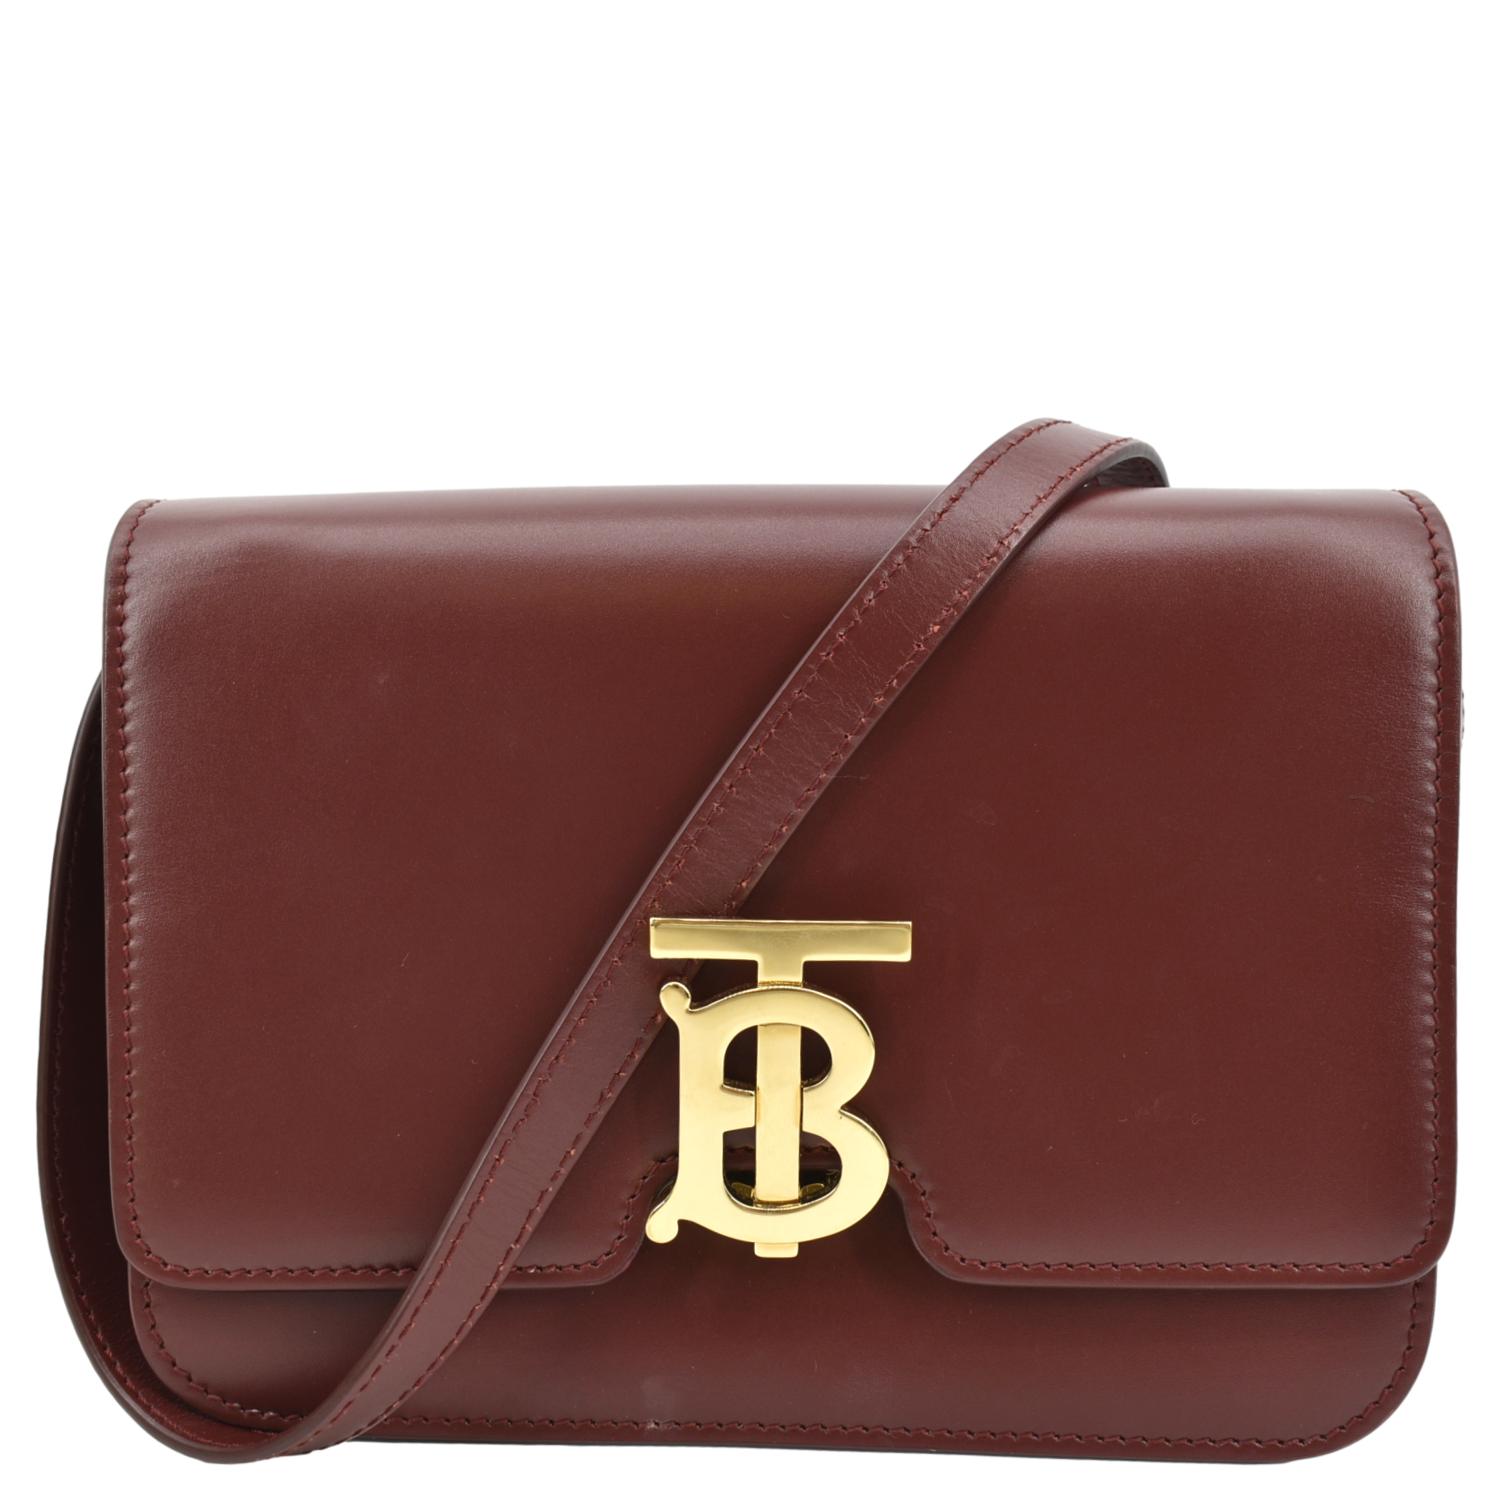 Burberry Brown Leather TB Monogram Medium Shoulder Bag